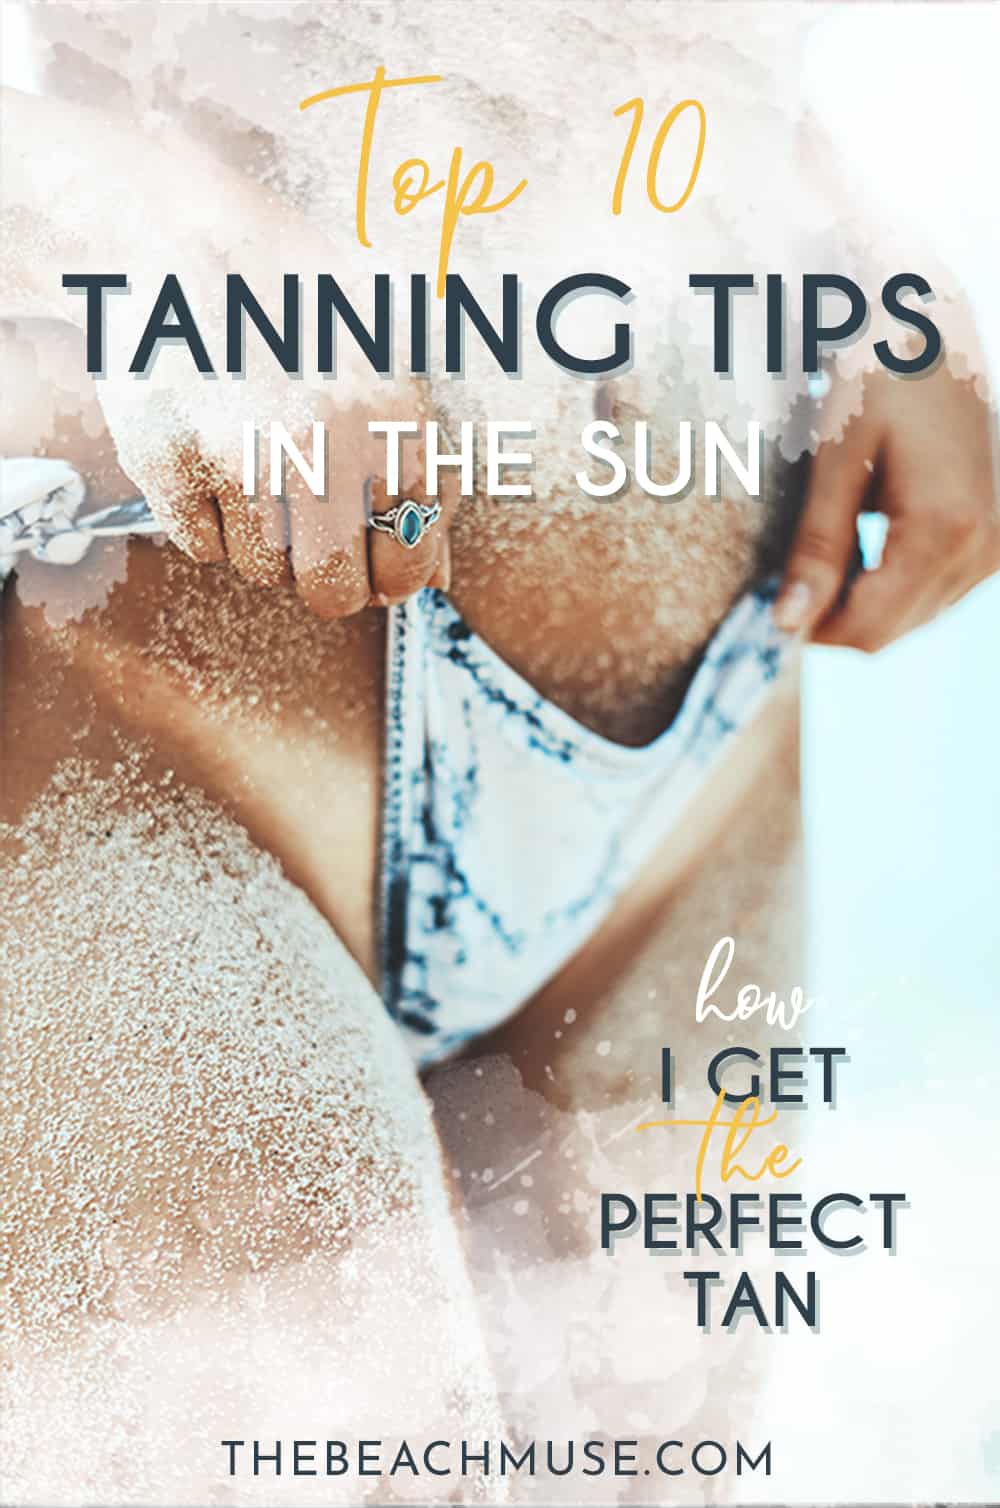 Tanning tips in the sun - get a dark tan fast